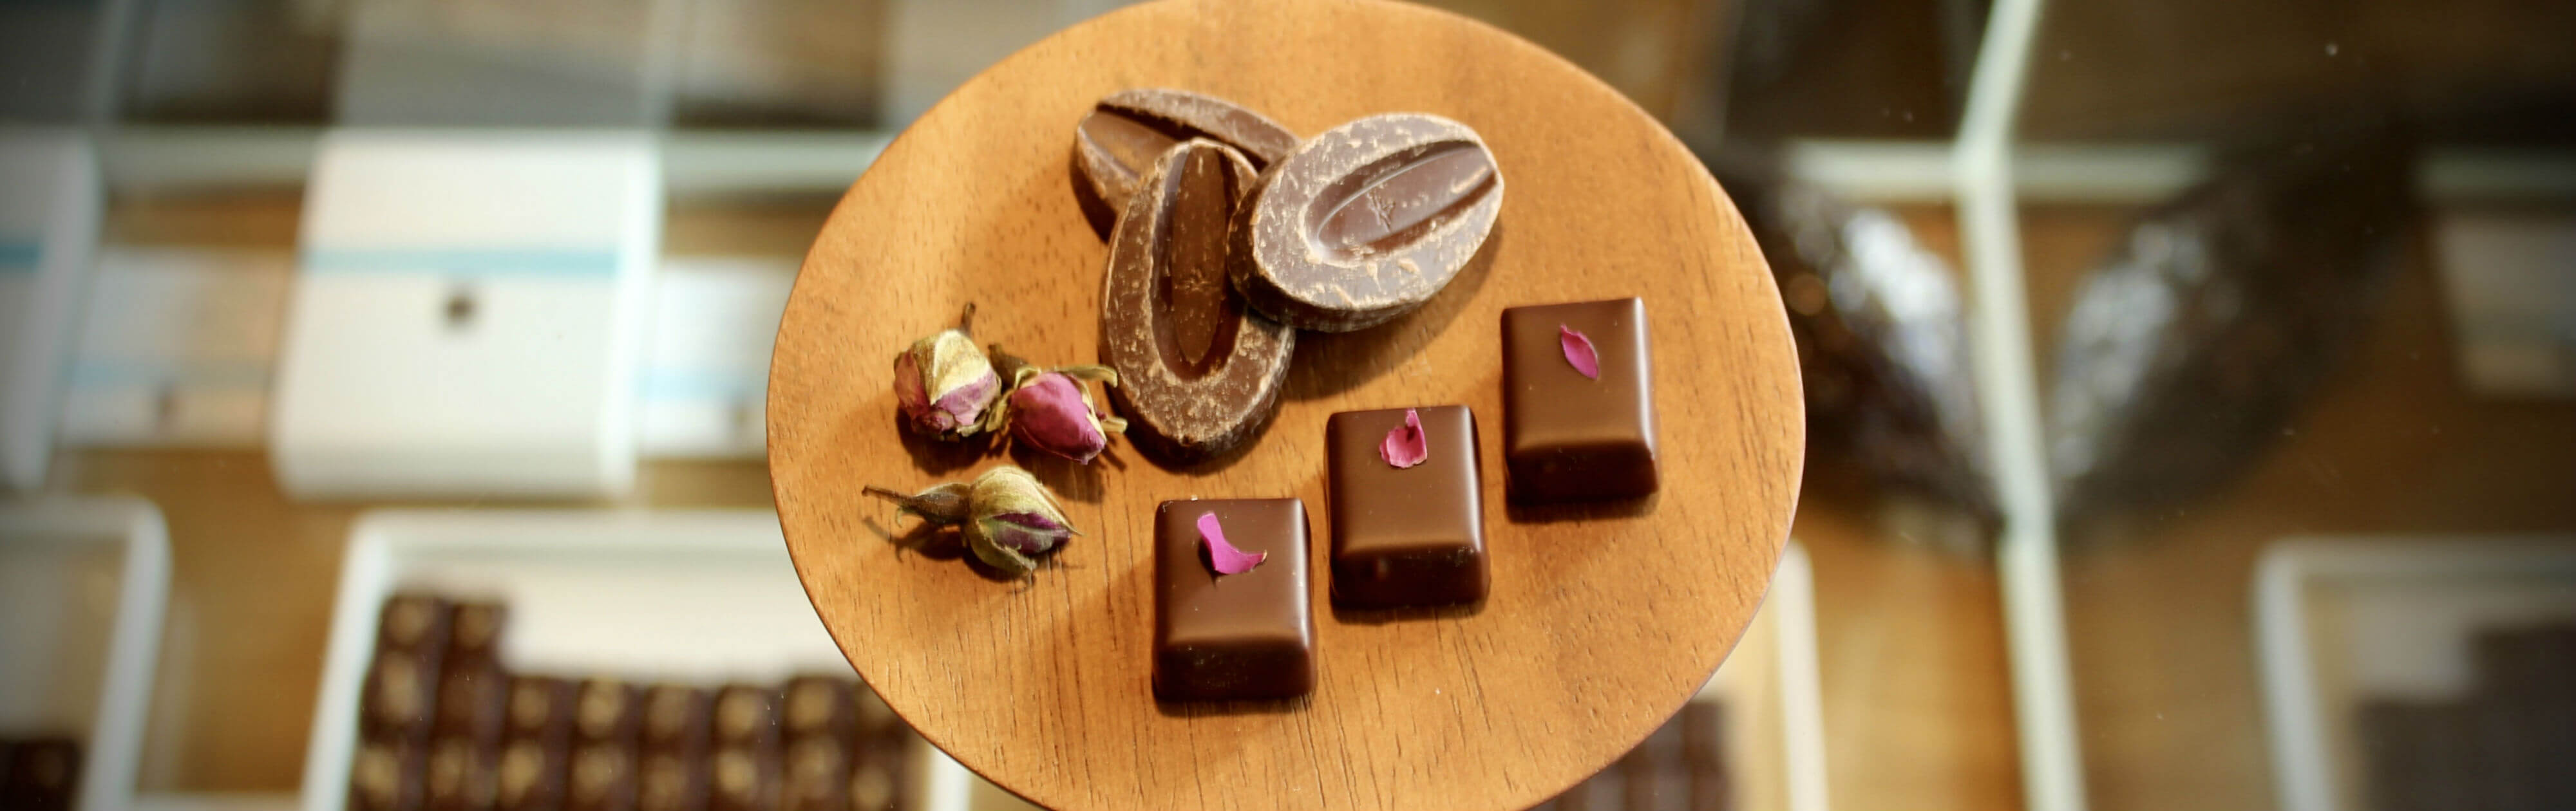 hilde devolder chocolatier chocolate with rose july 2018